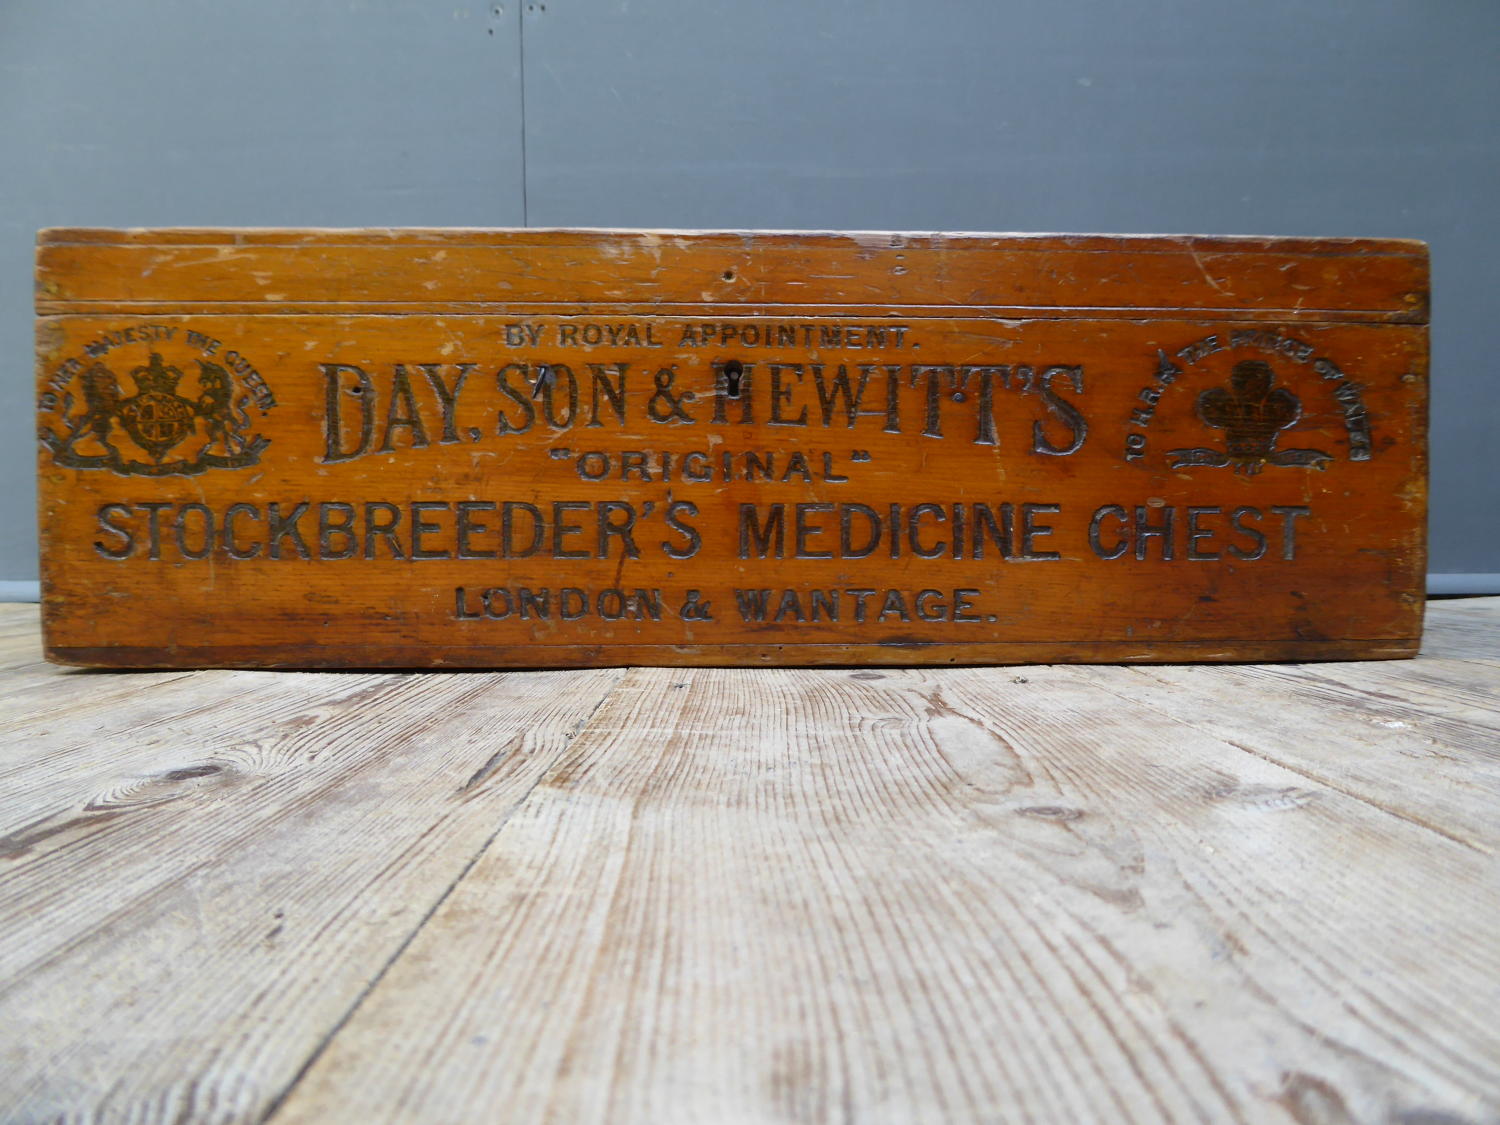 Stockbreeders Medicine Chest